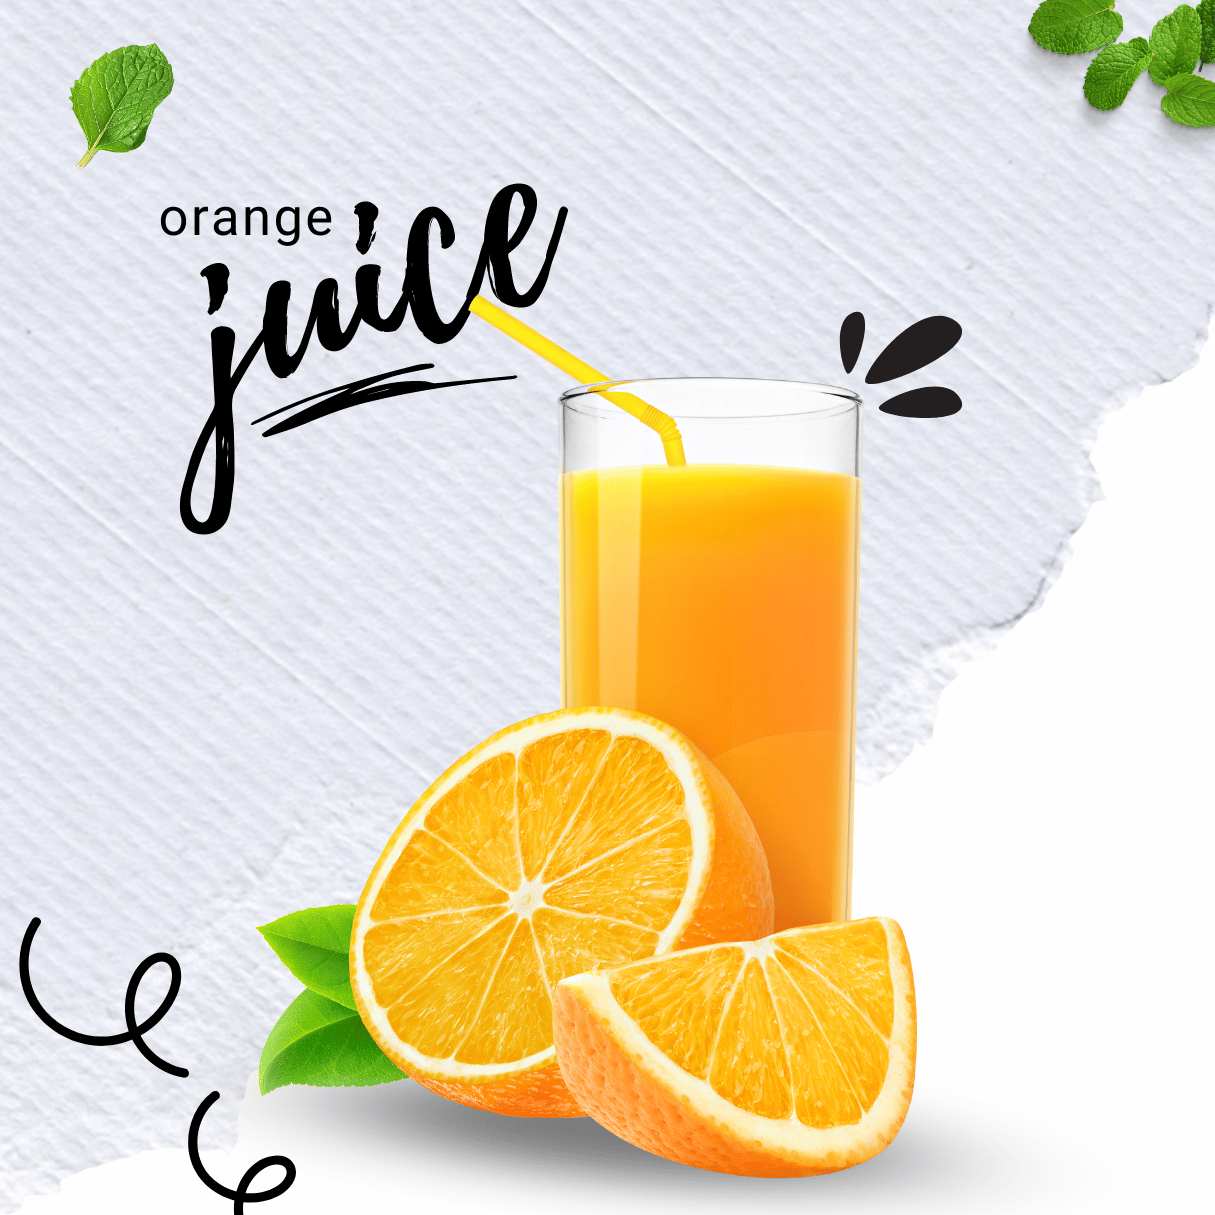 pure orange juice preview image.